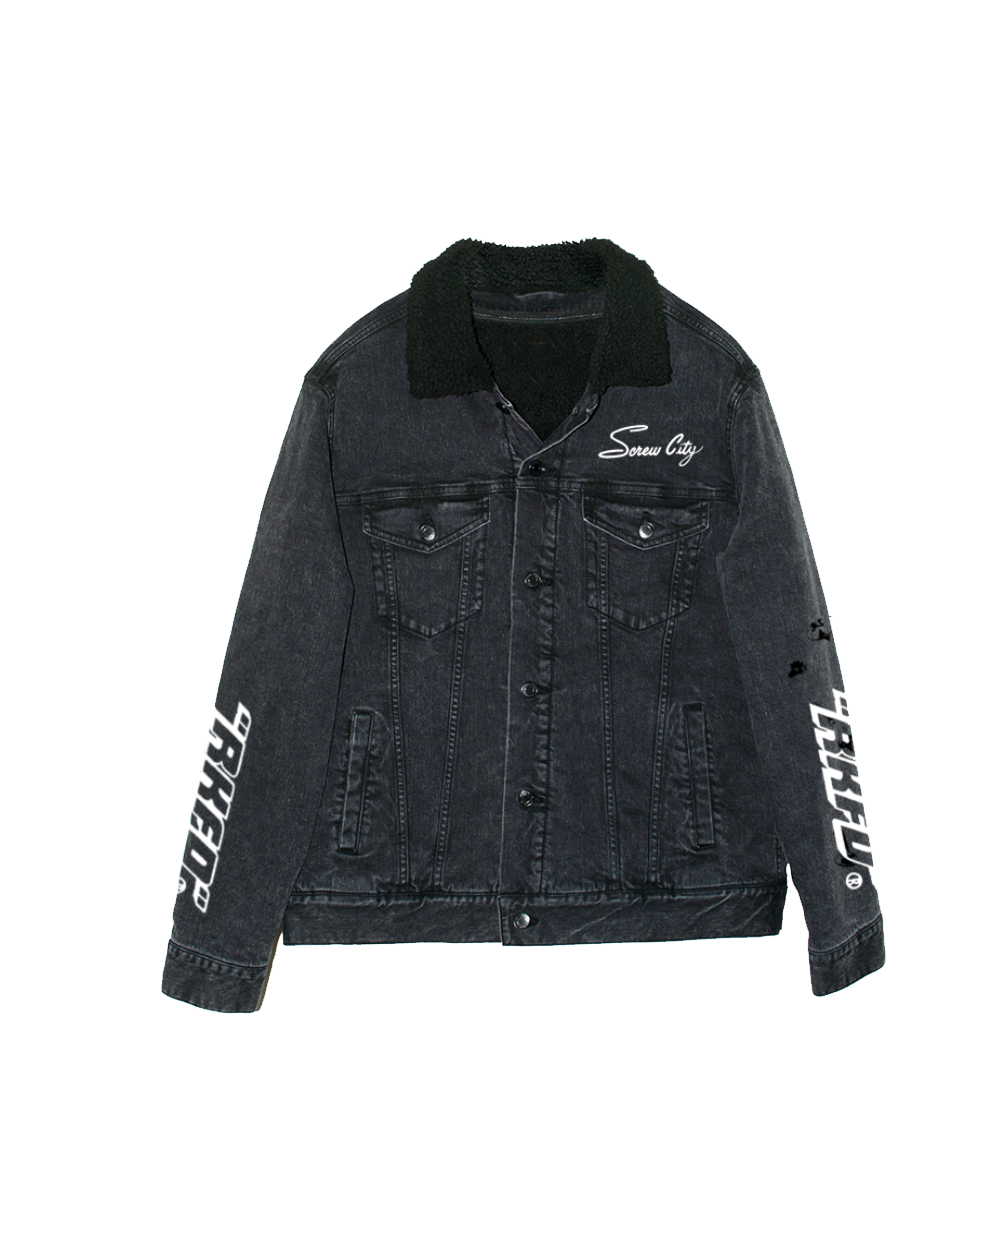 Sherpa Denim Jacket (Faded Black)